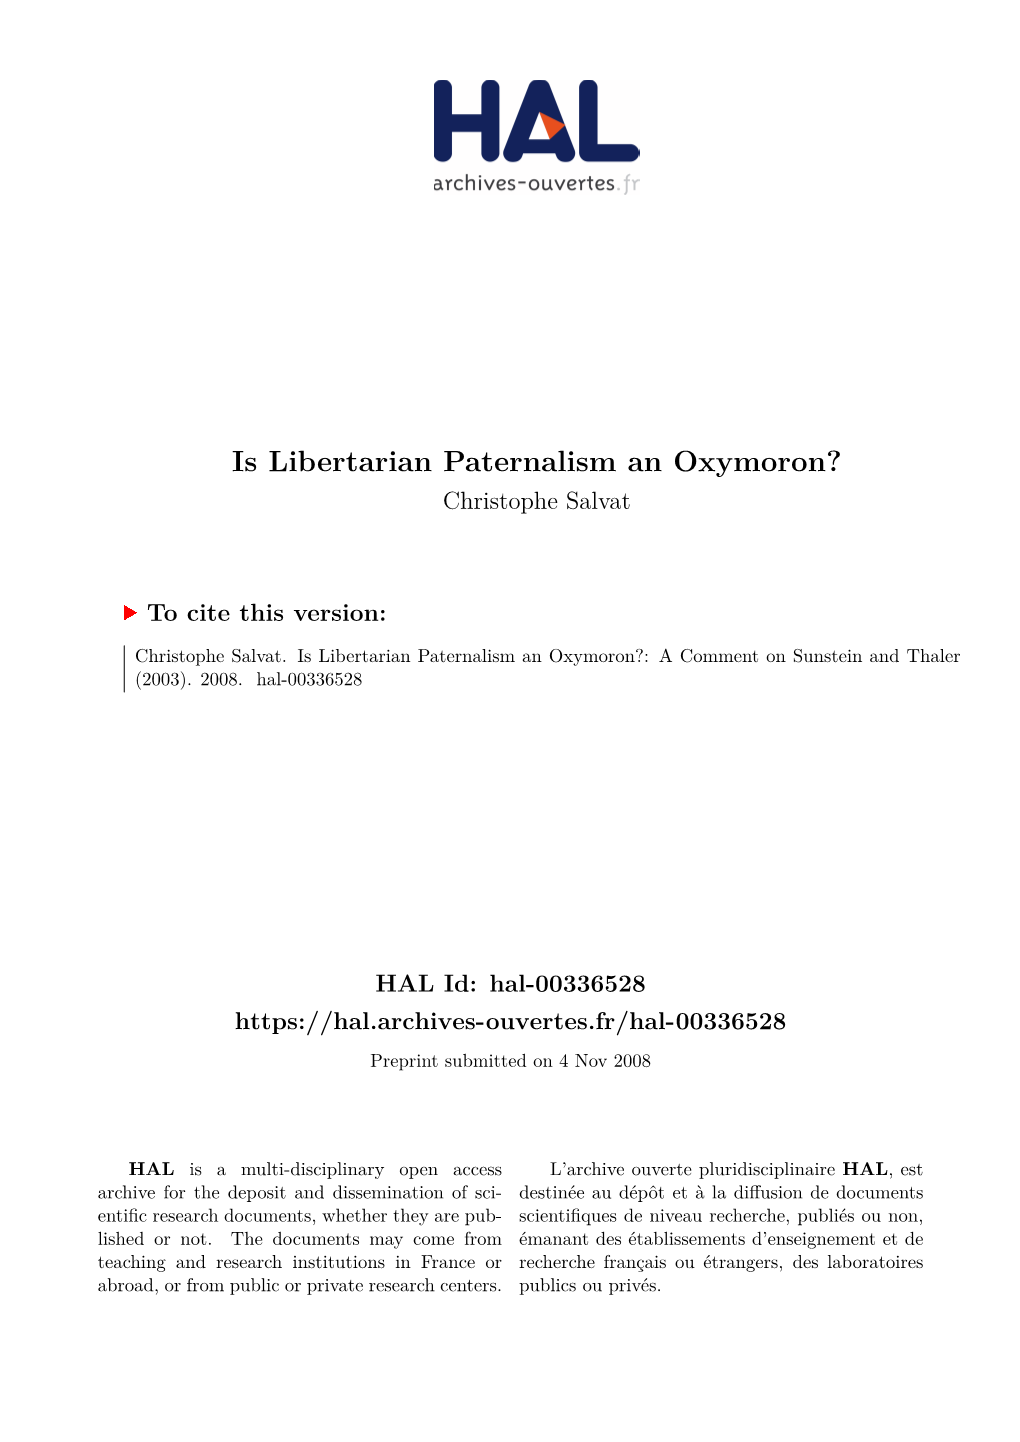 Is Libertarian Paternalism an Oxymoron? Christophe Salvat